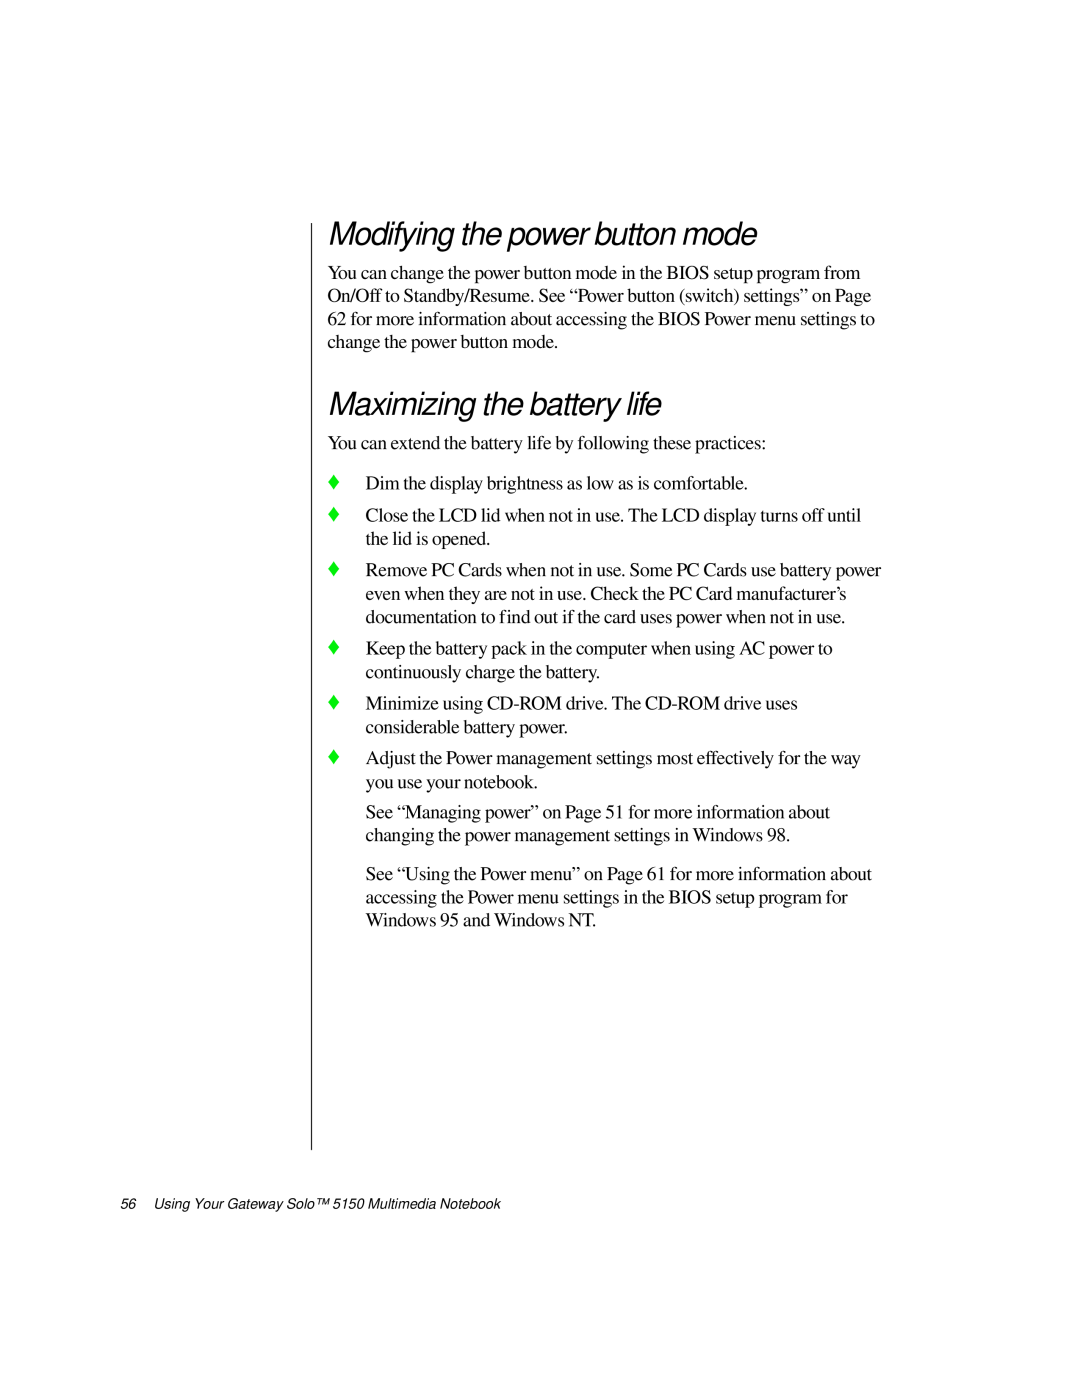 Gateway TM 5150 manual Modifying the power button mode, Maximizing the battery life 